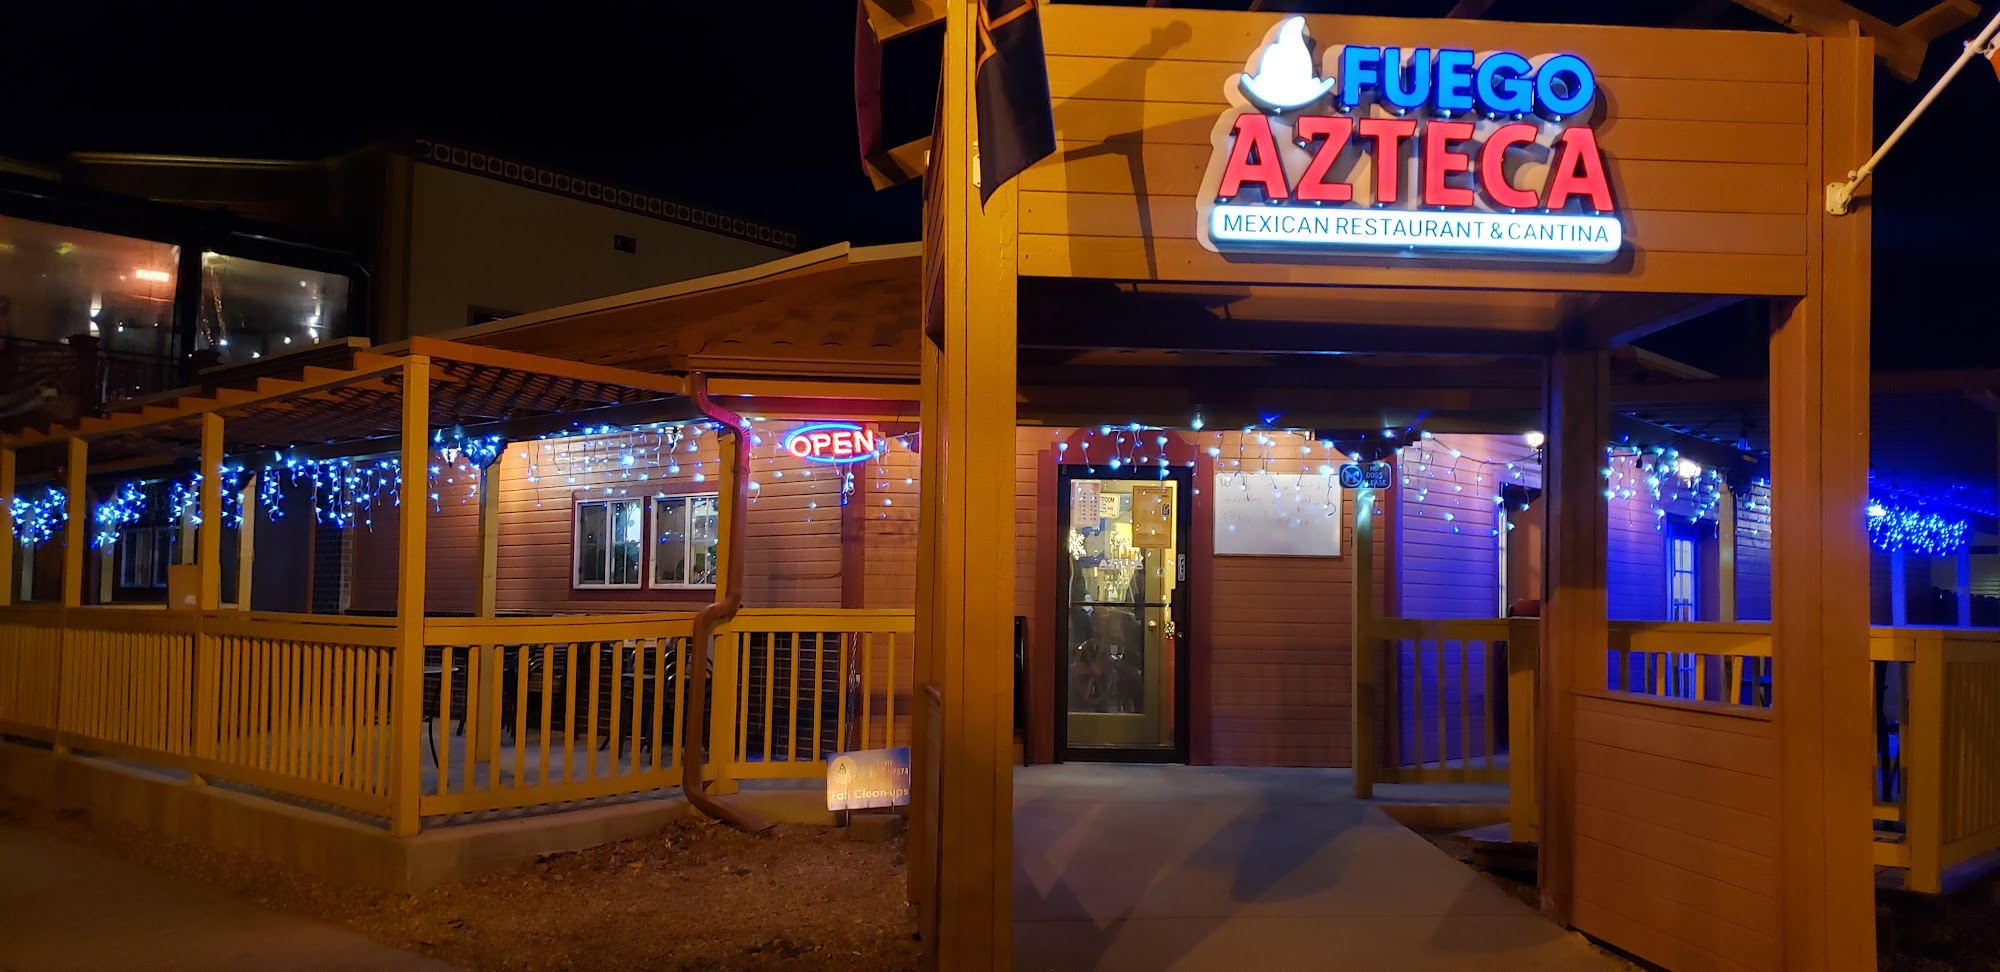 Fuego Azteca Mexican Restaurant & Cantina